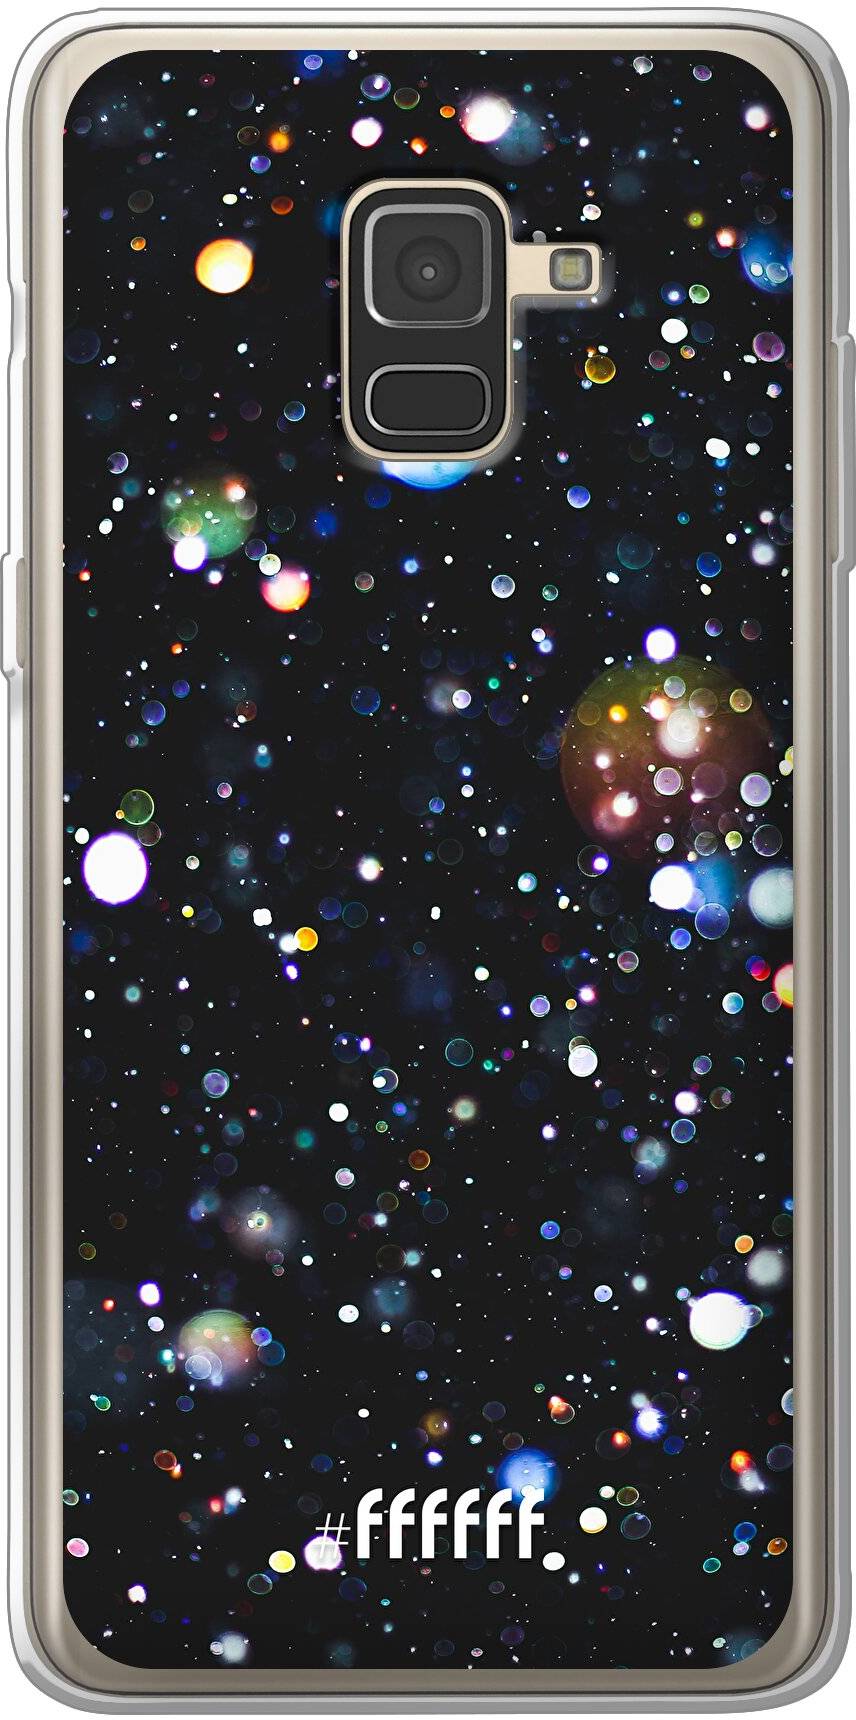 Galactic Bokeh Galaxy A8 (2018)